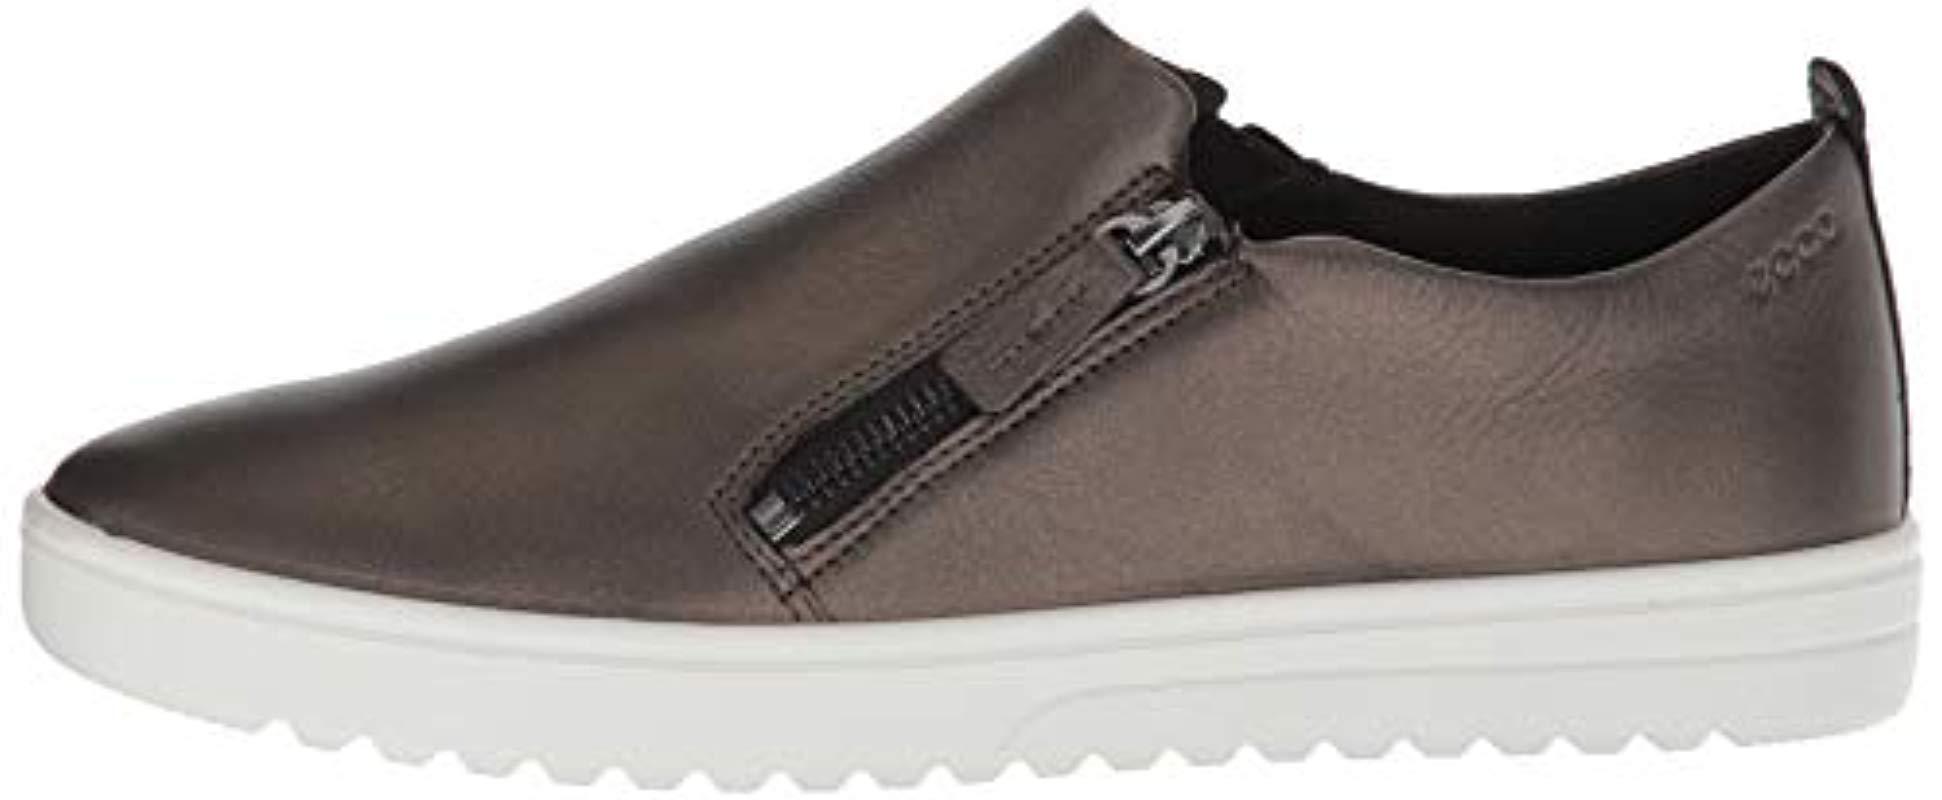 Ecco Leather Fara Zip Fashion Sneaker Stone Metallic (Black) Save 37% - Lyst